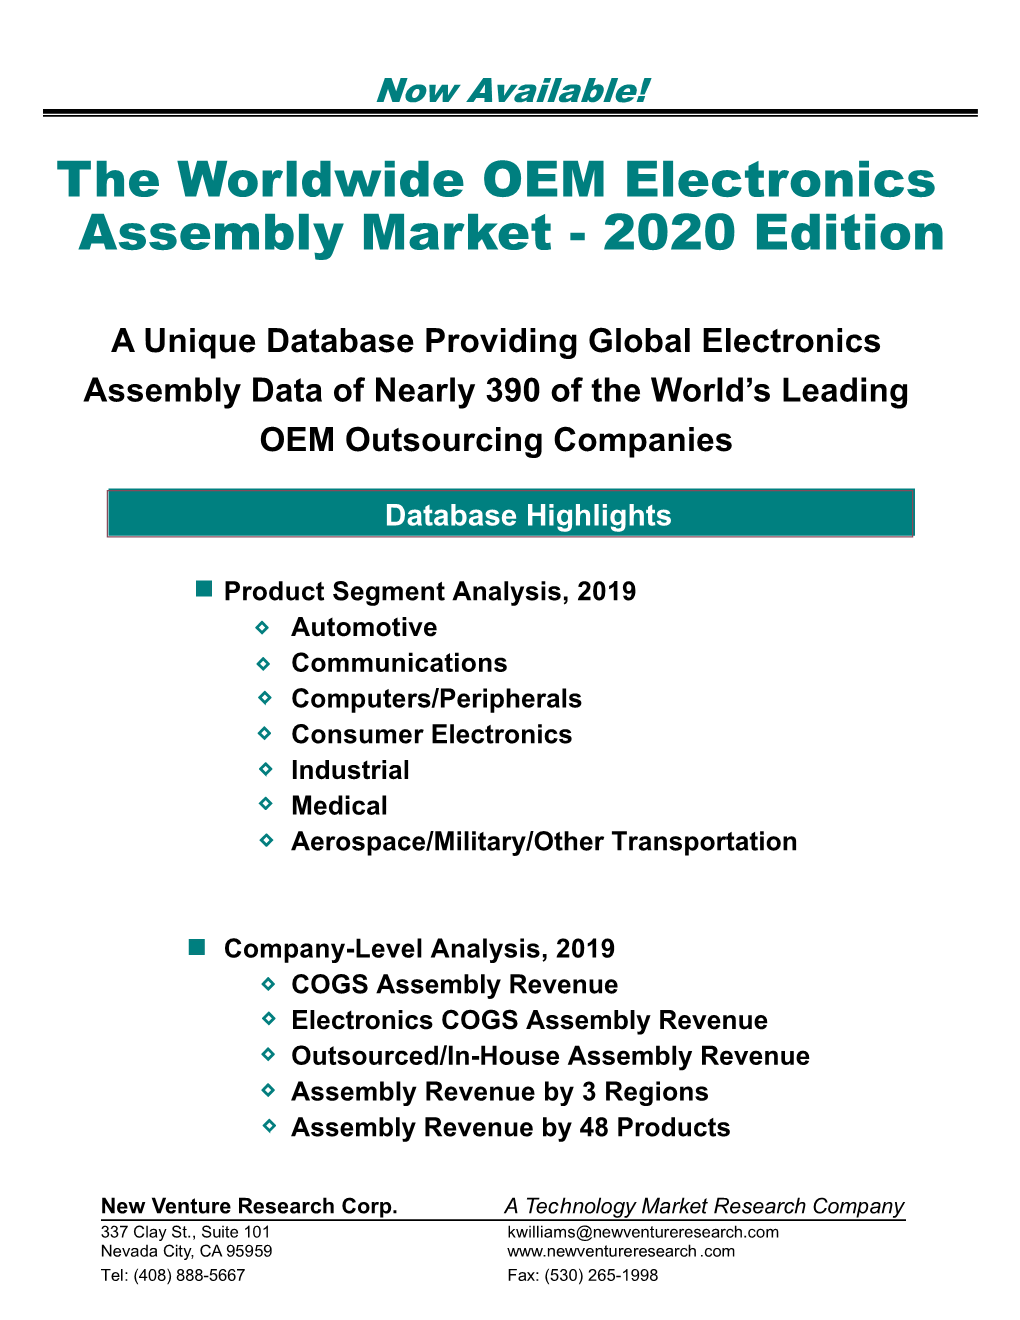 The Worldwide OEM Electronics Assembly Market - 2020 Edition